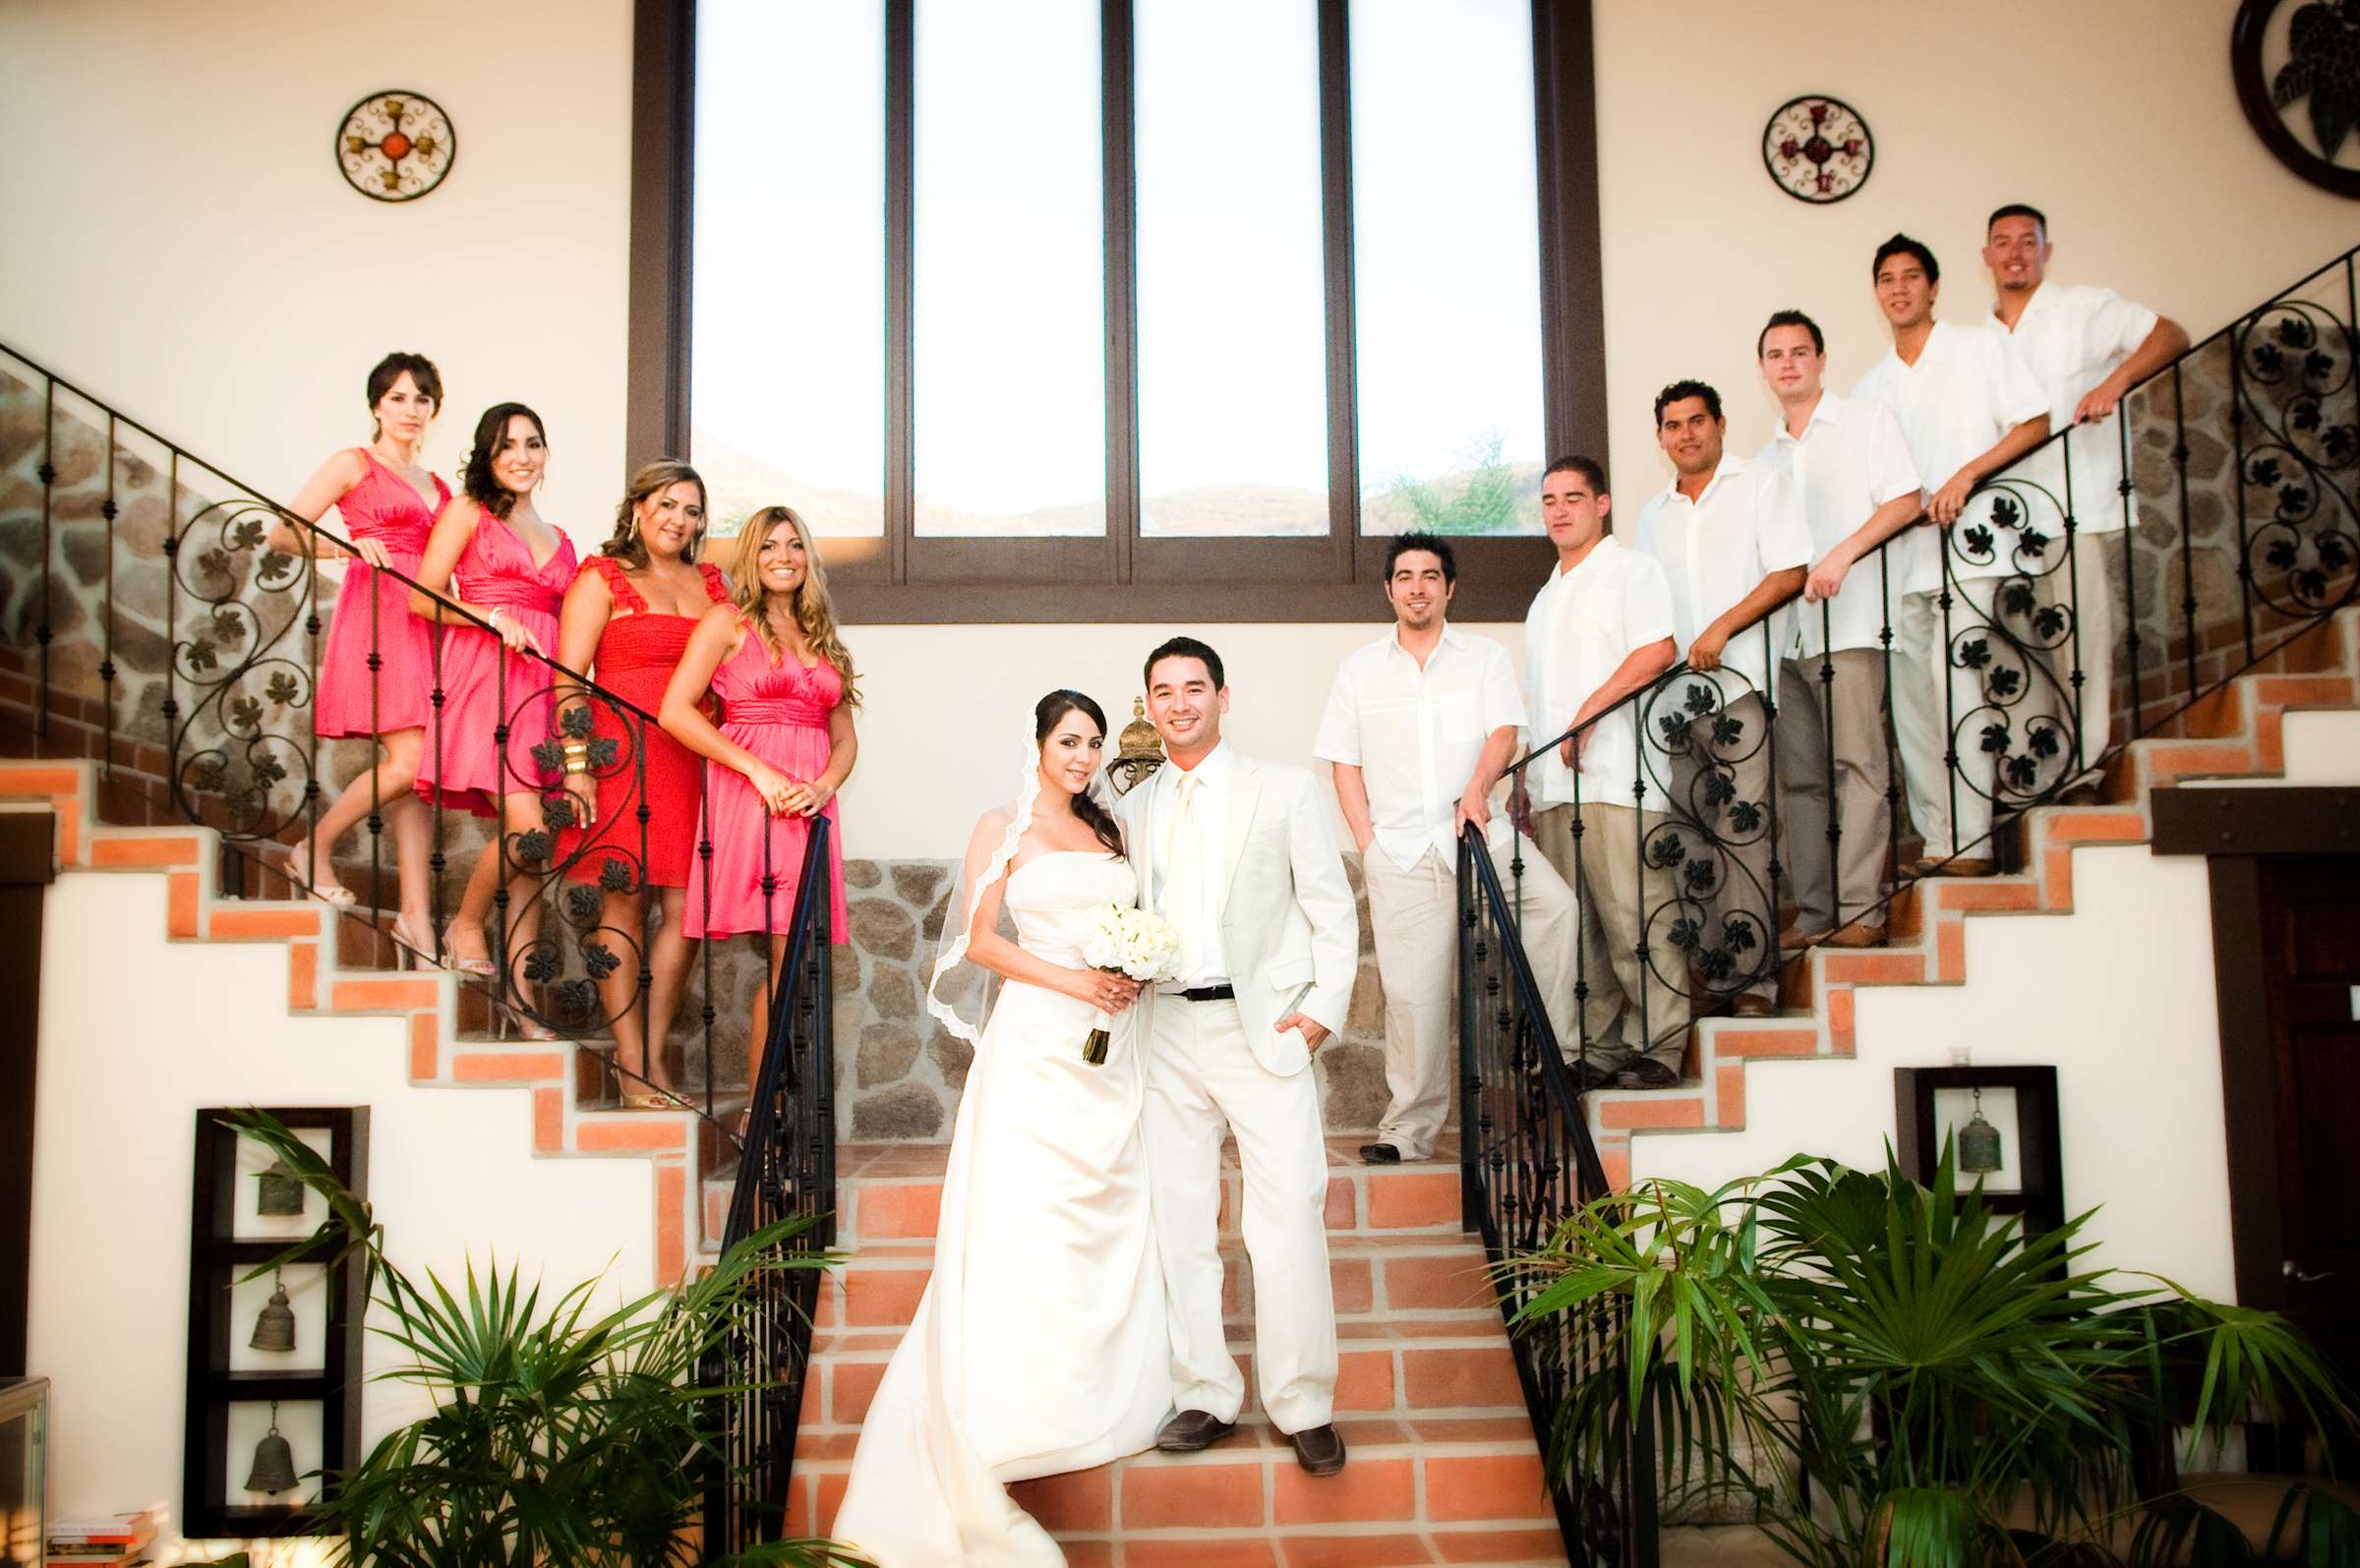 Hacienda Guadalupe Ensenada Baja California Wedding, Perla and Martin Wedding Photo #7 by True Photography